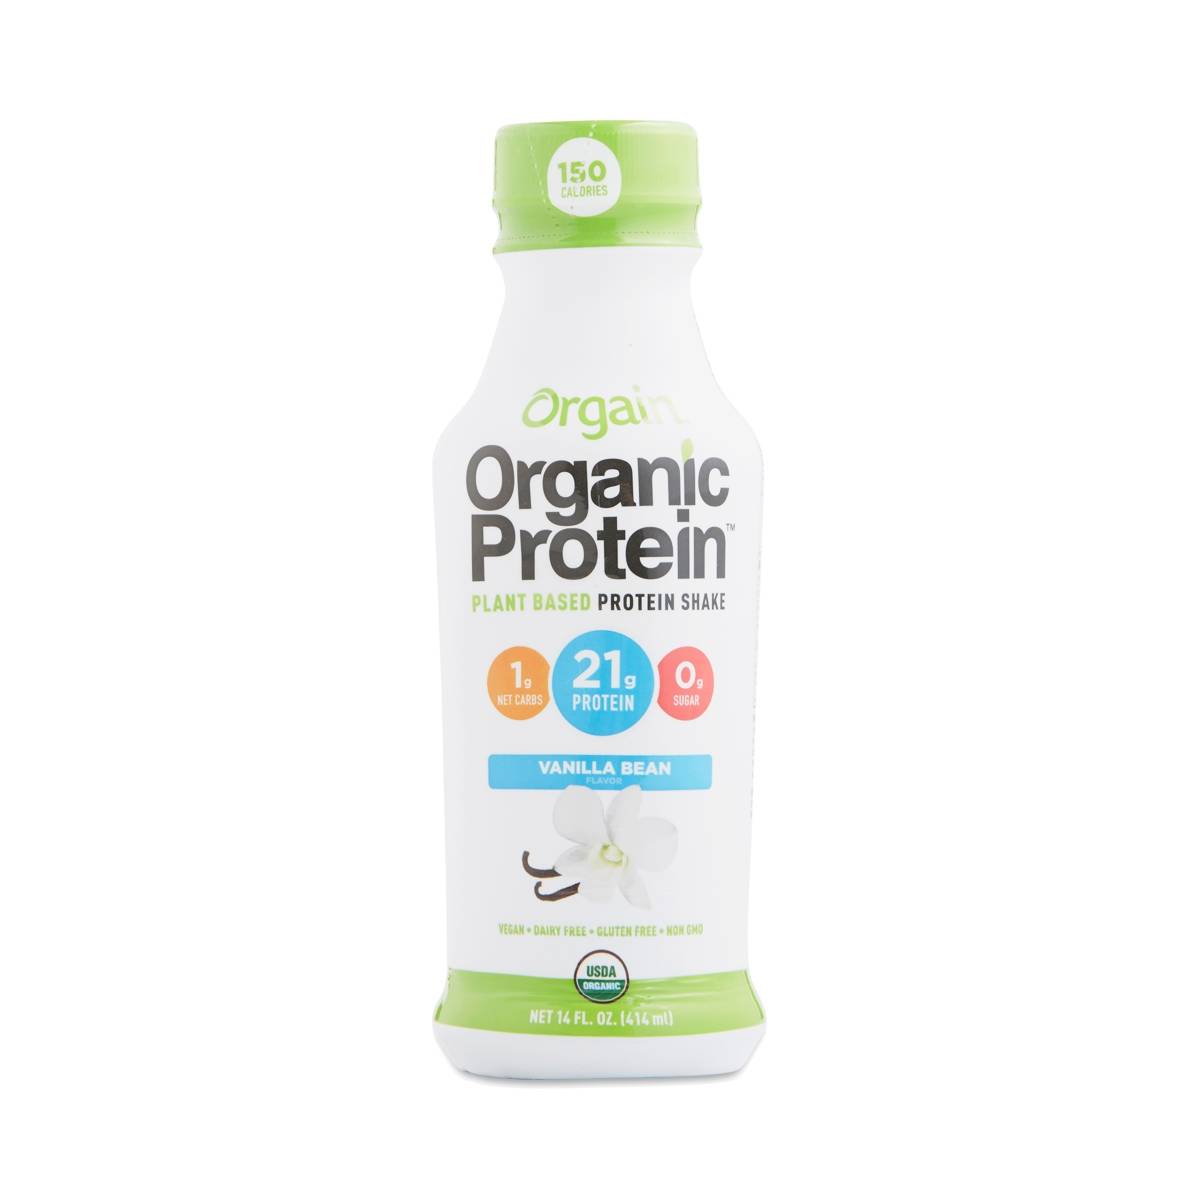 Orgain Organic Plant Based Protein Shake, Vanilla Bean